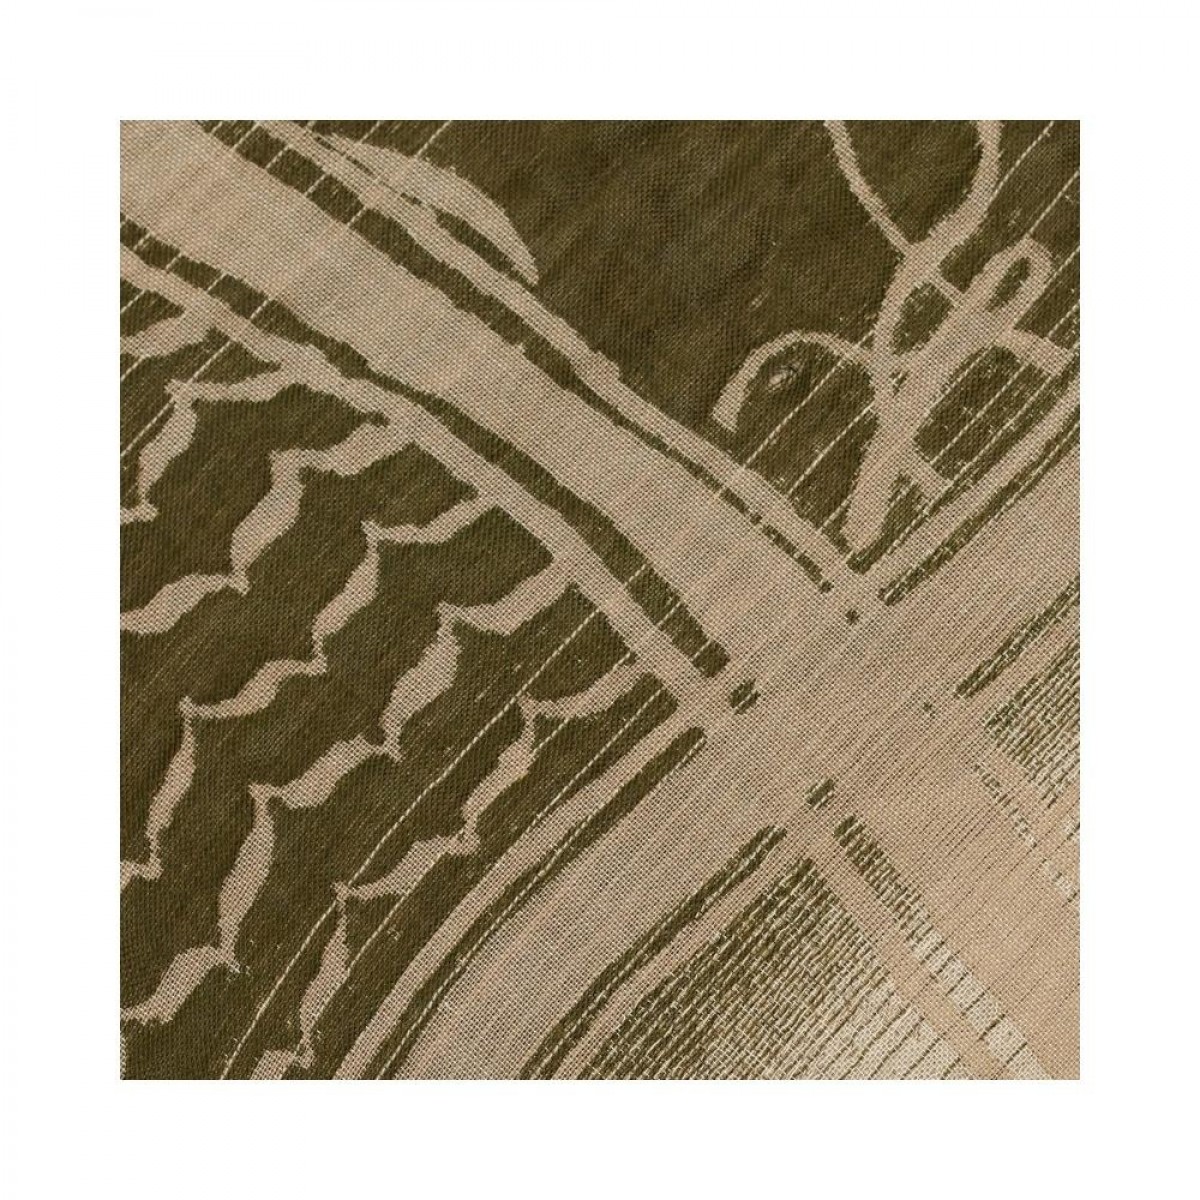 scarf amalin - brown olive - print